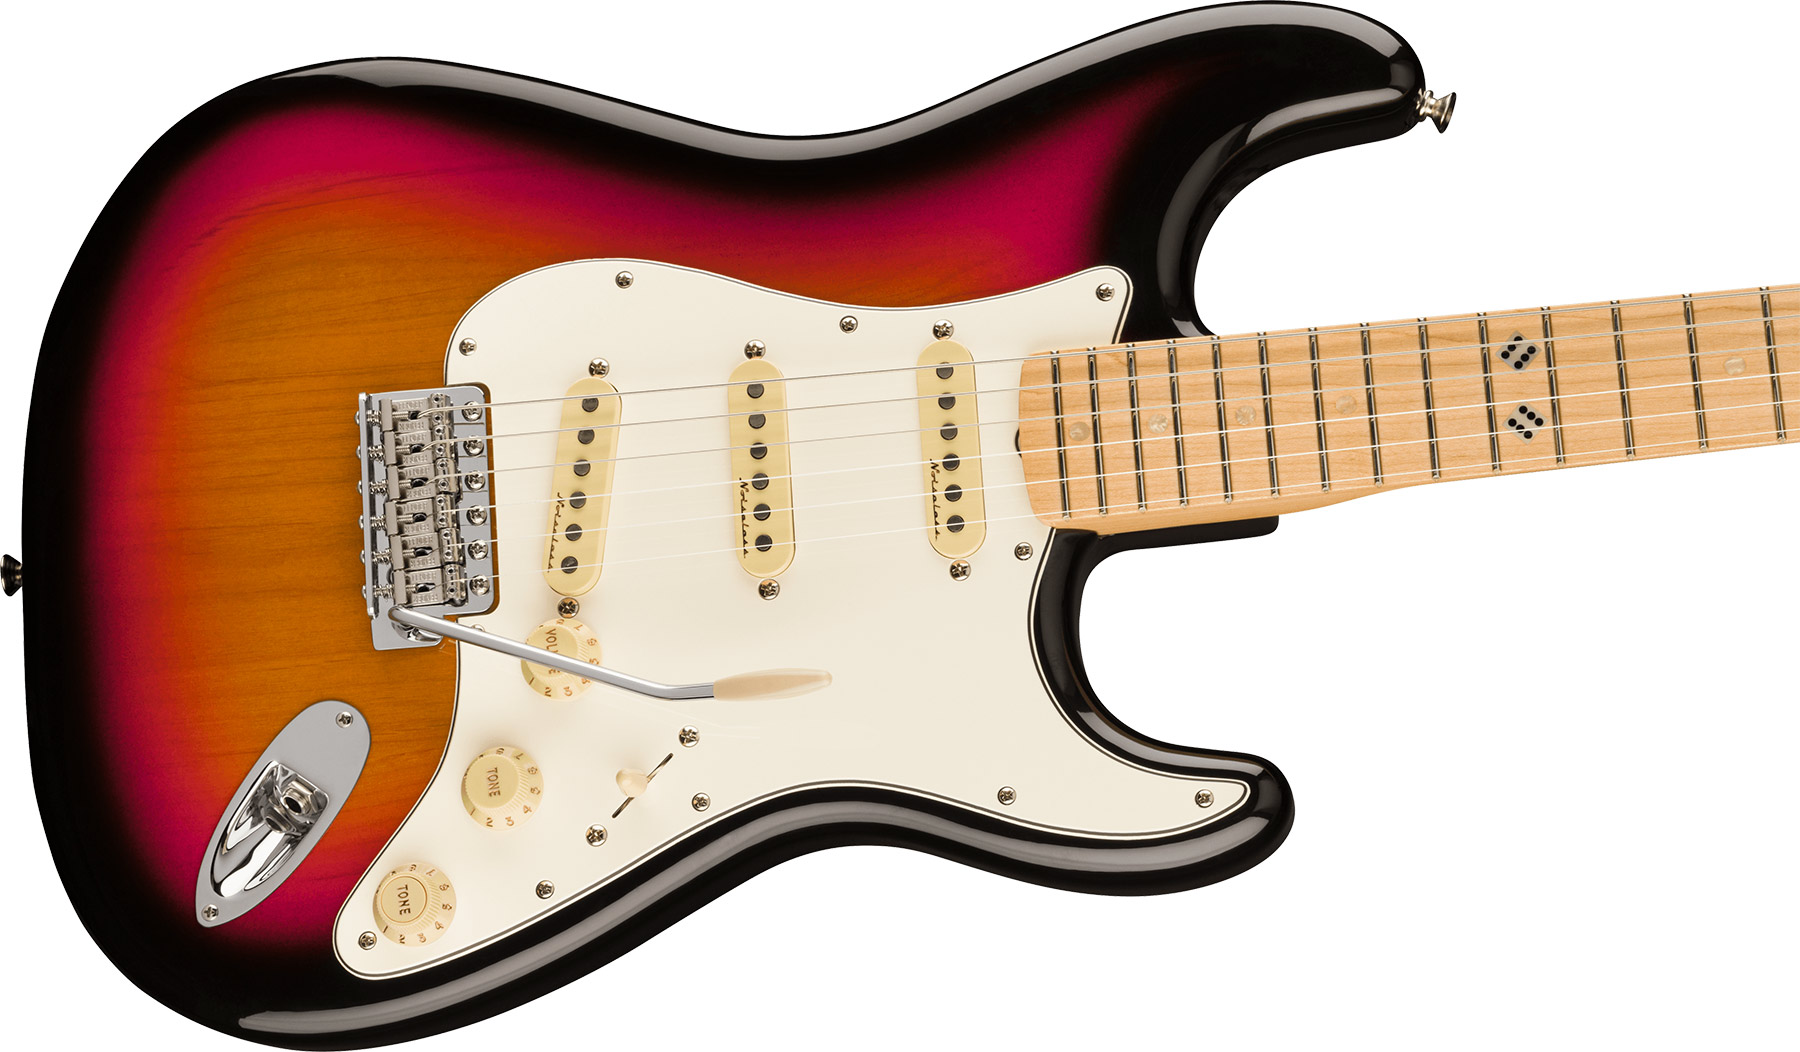 Fender Steve Lacy Strat People Pleaser Mex Signature 3s Trem Mn - Chaos Burst - Str shape electric guitar - Variation 2